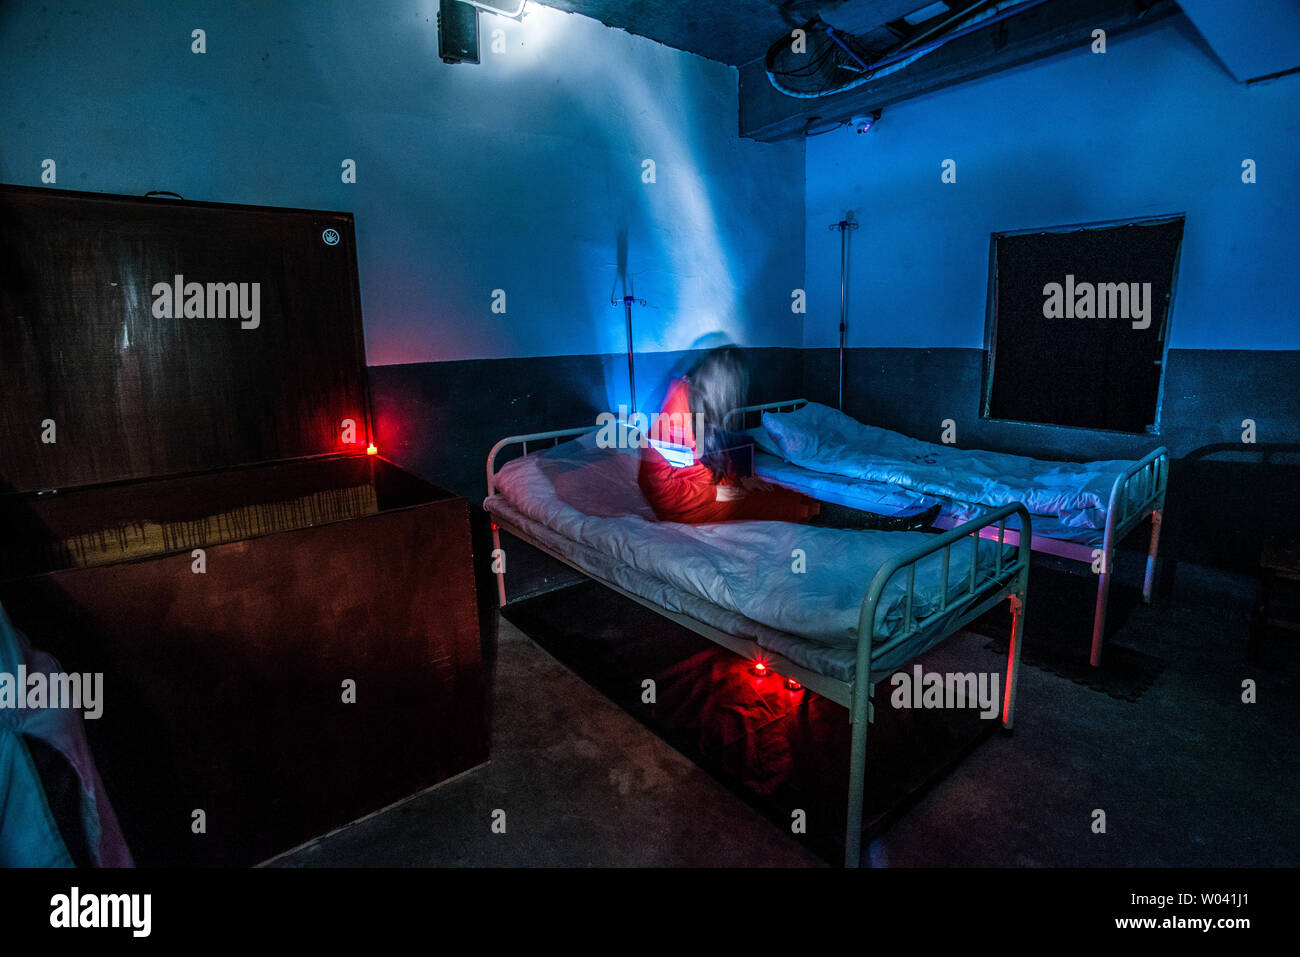 Horror haunted house, hospital-themed secret room escape. Stock Photo